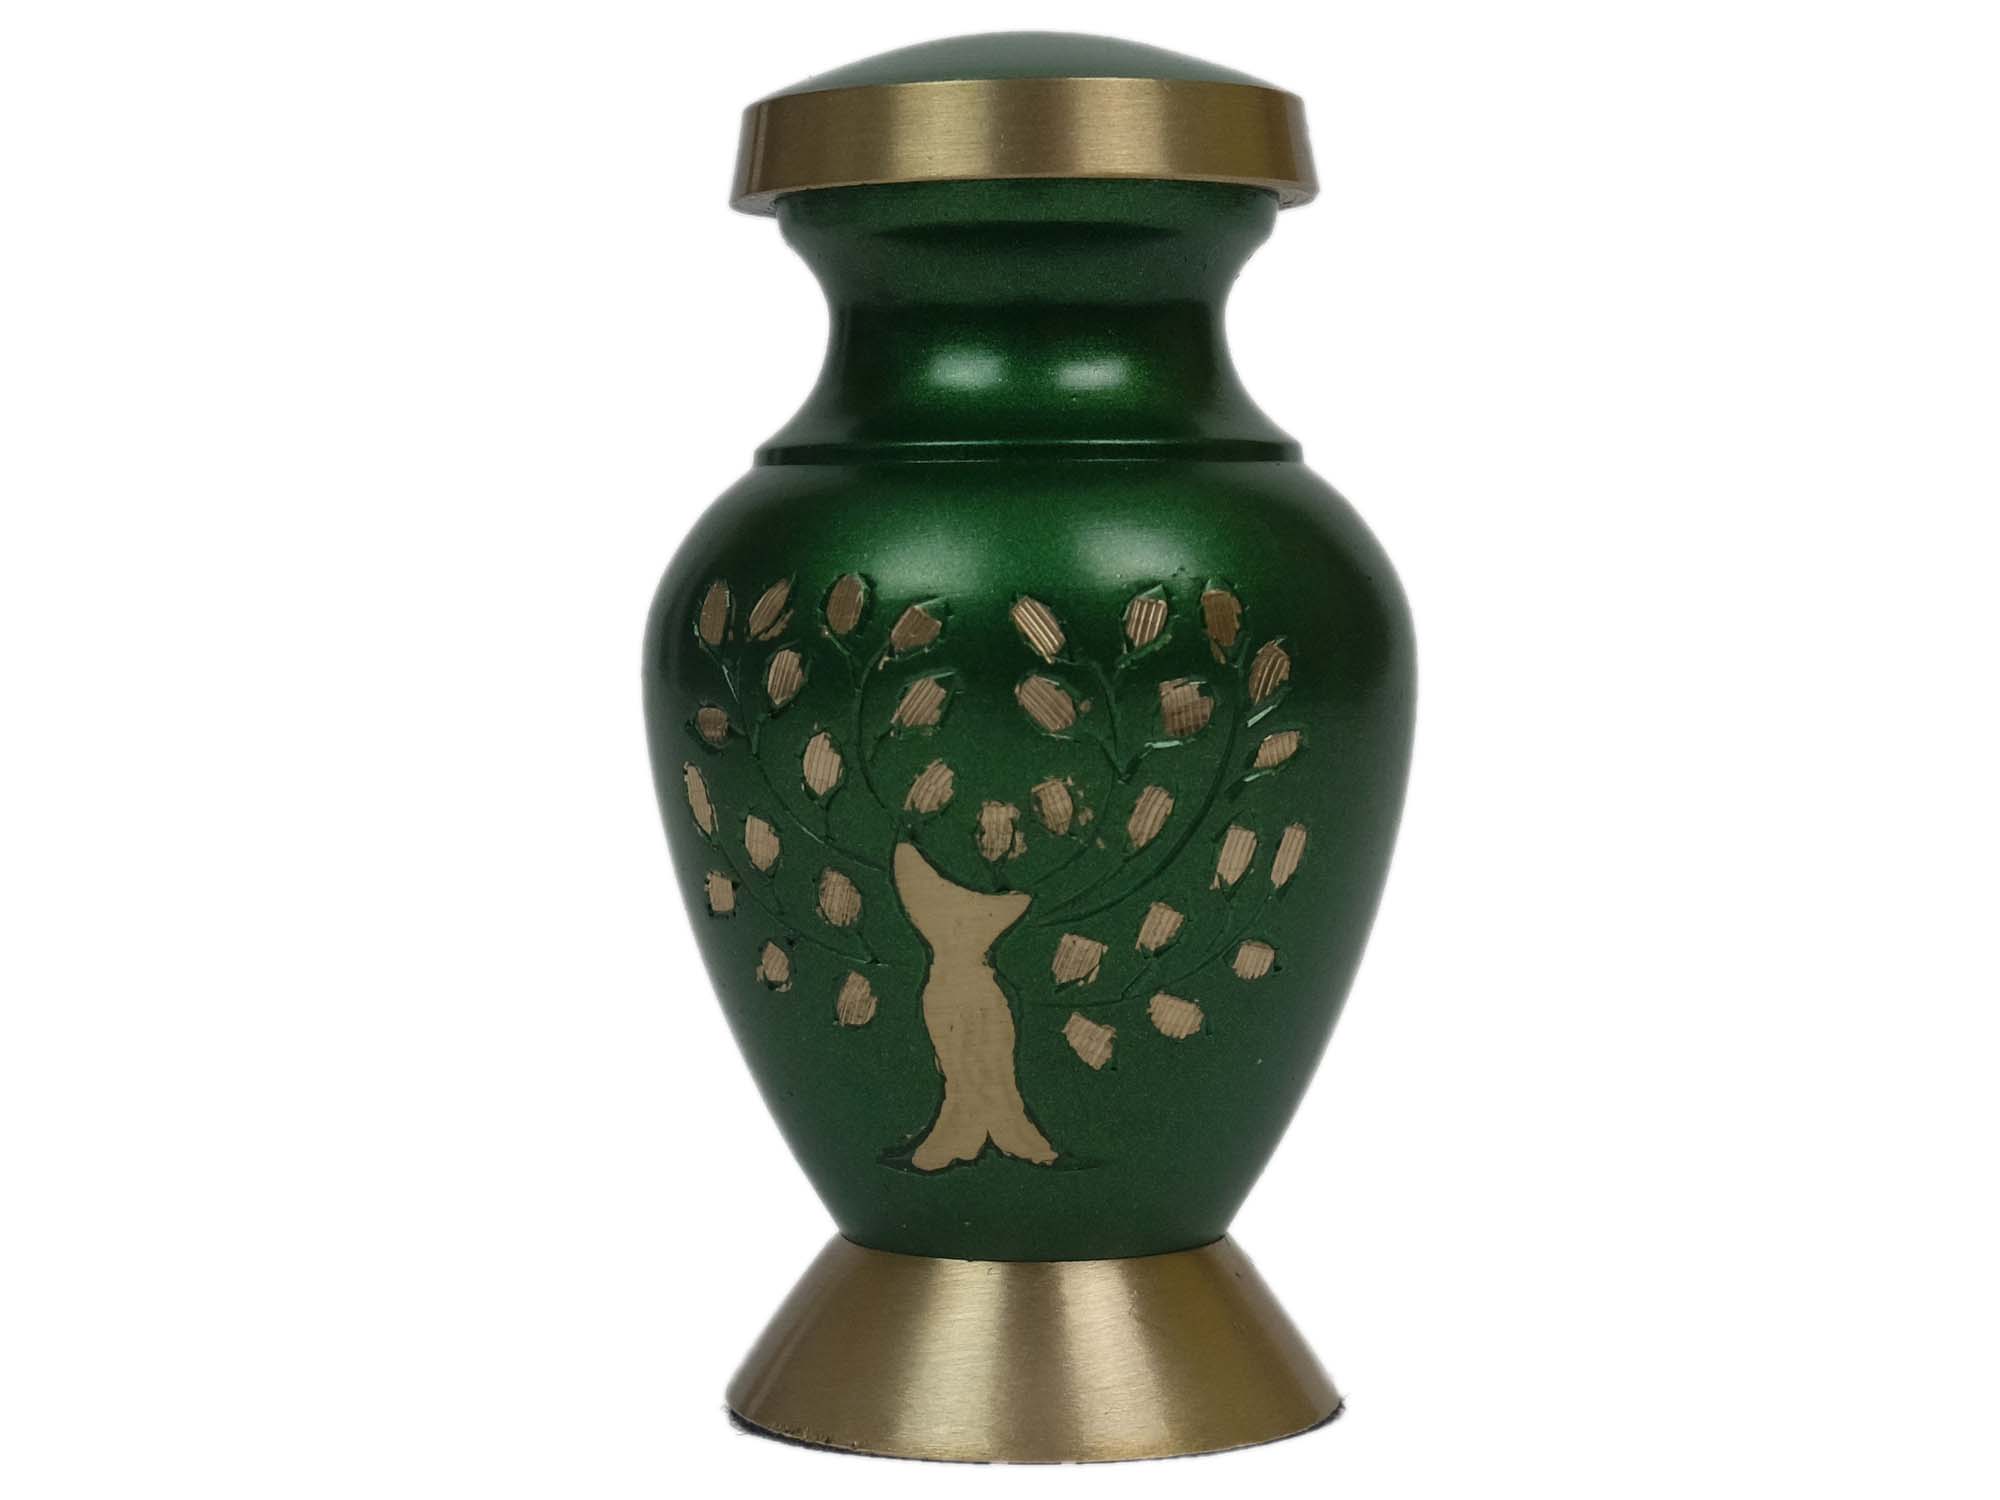 Cremation Keepsake Urn In Velvet Box: Green Finish, Engraved Tree Design - 1136-30-677 (8UW10)